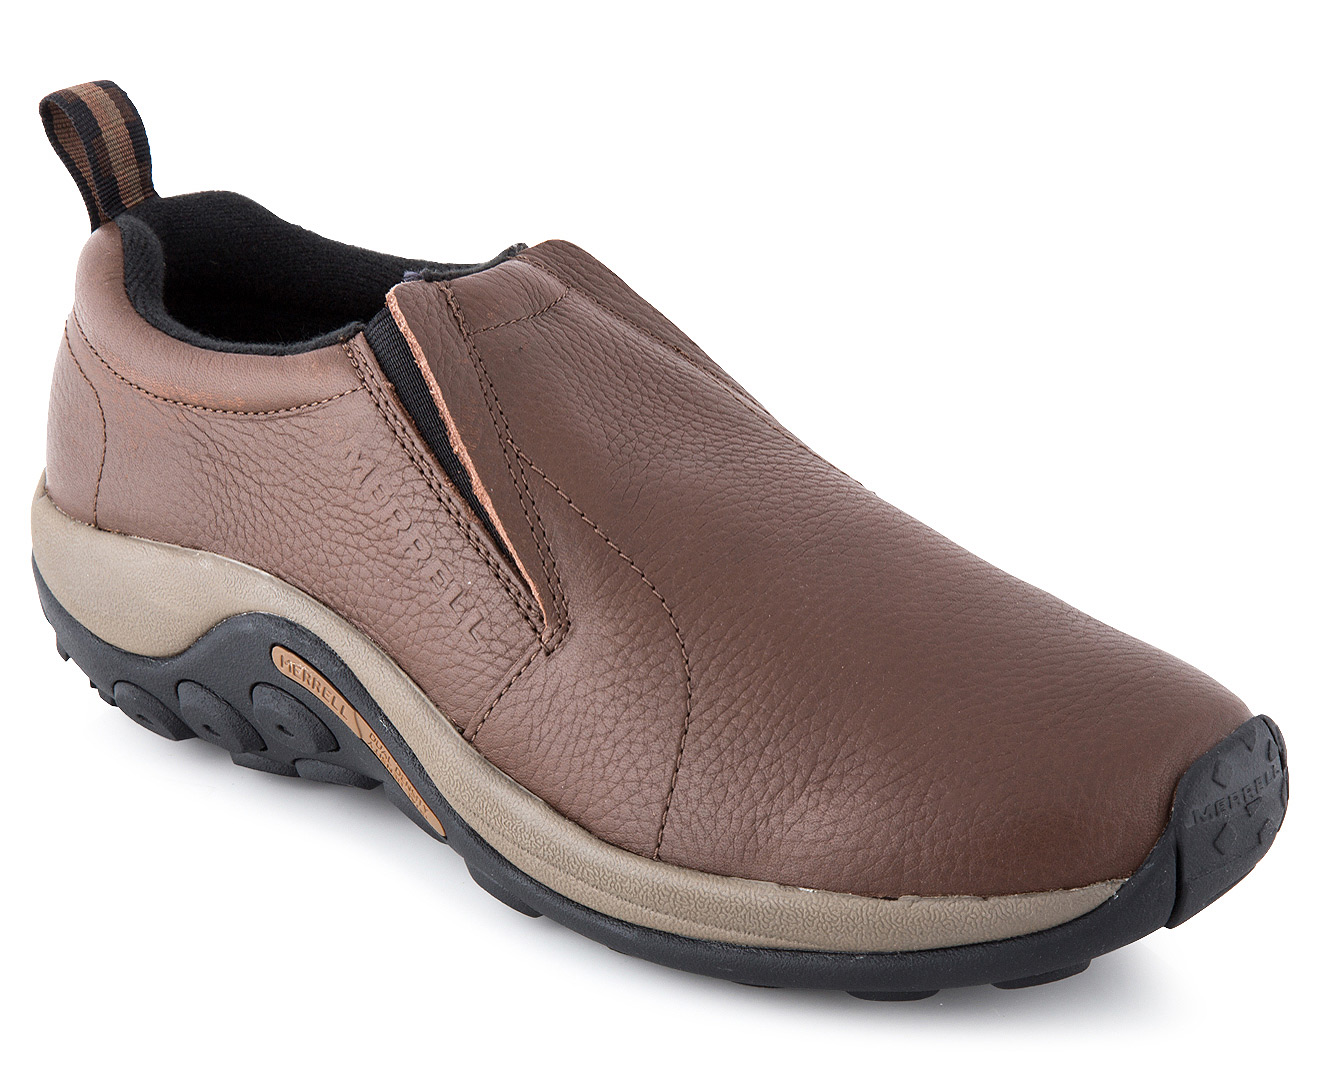 Merrell Men's Jungle Moc Leather Shoe - Black Slate | Scoopon Shopping